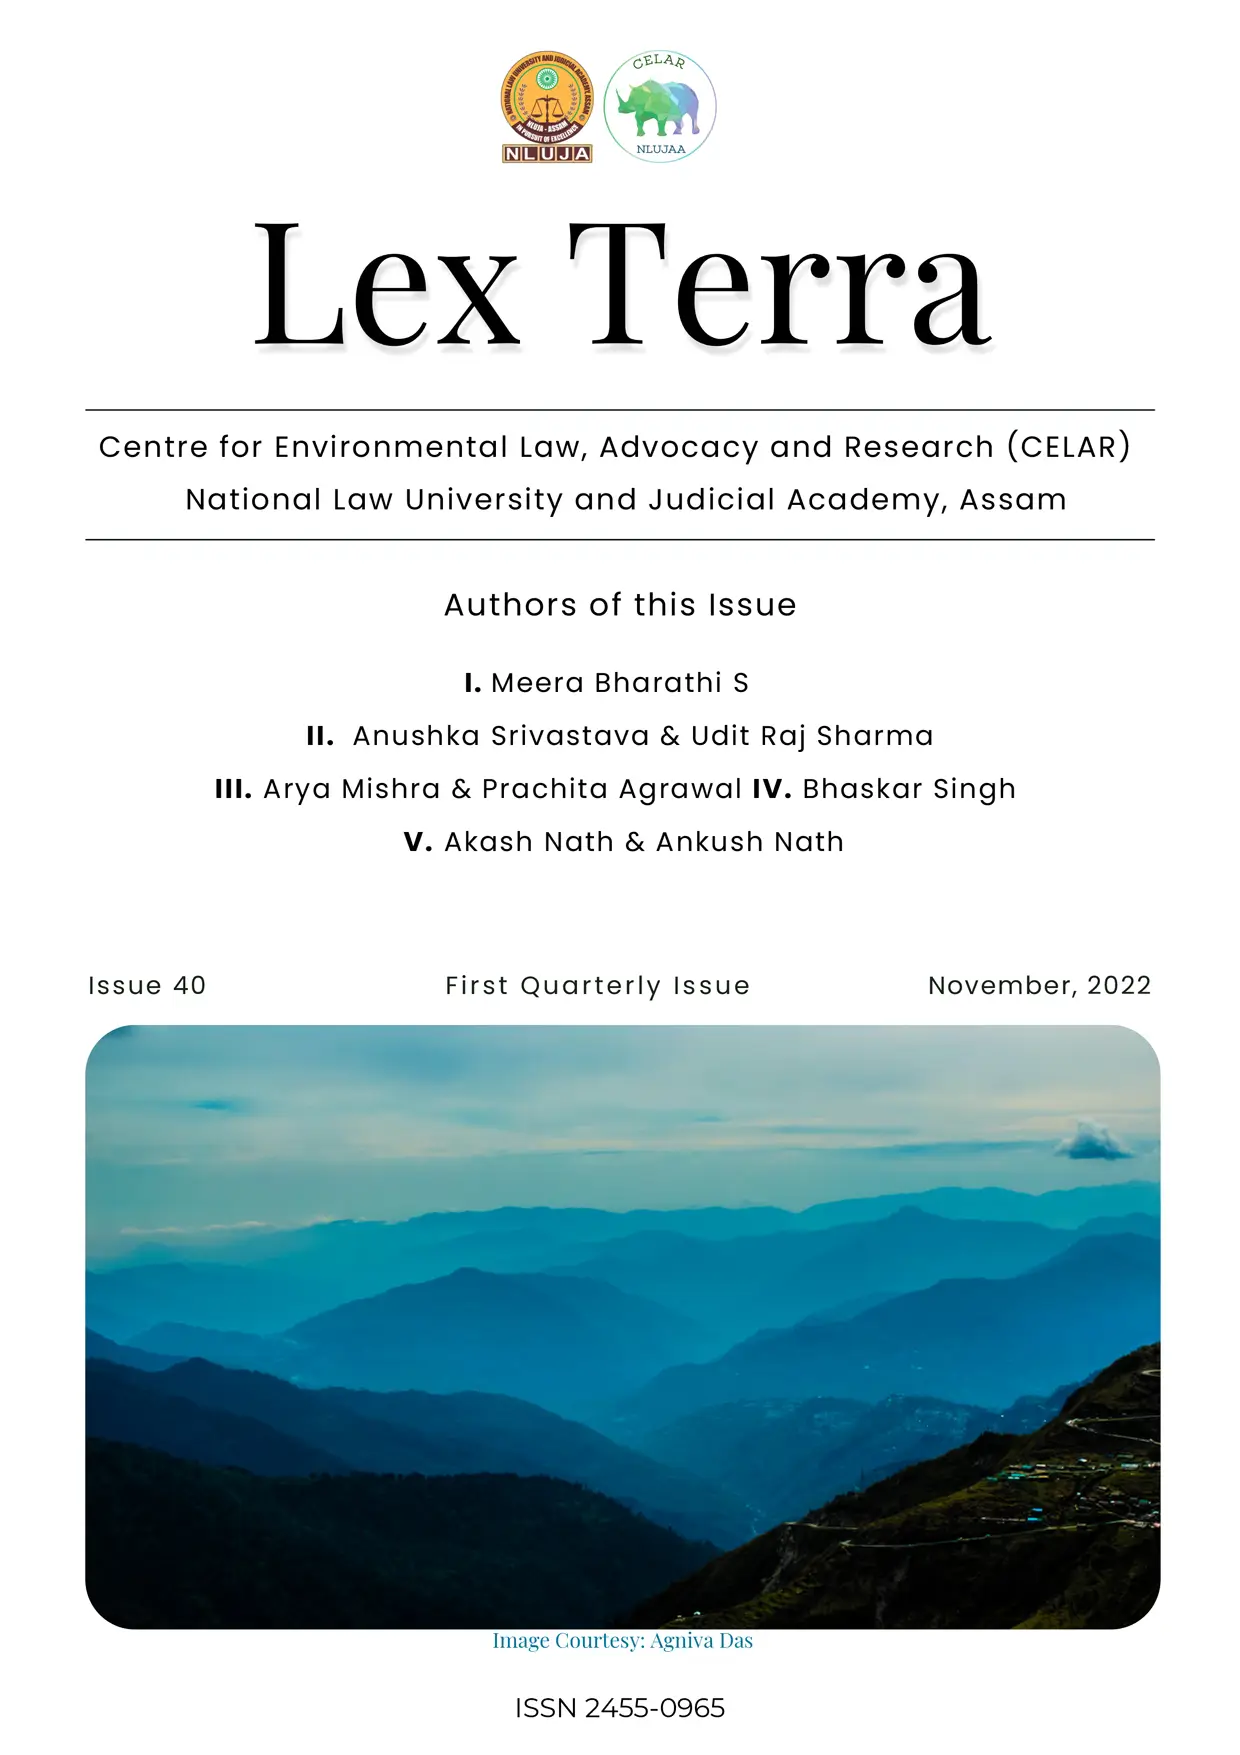 Lext Terra Issue 40